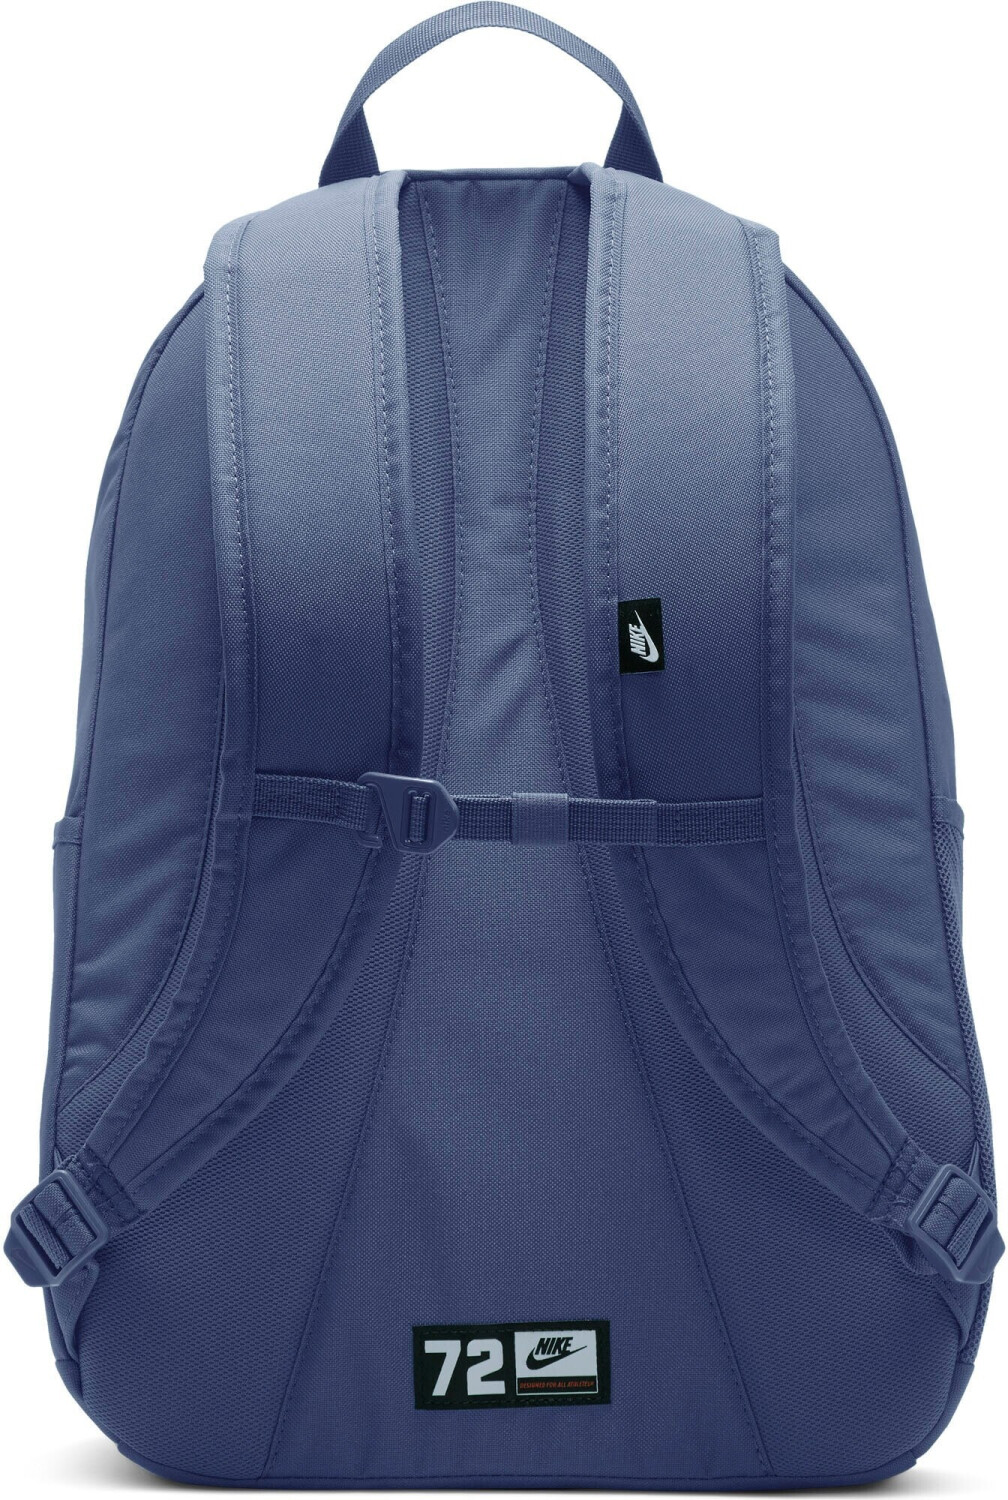 Nike Hayward 2.0 Backpack (BA5883) mystic navy/white desde 32,00